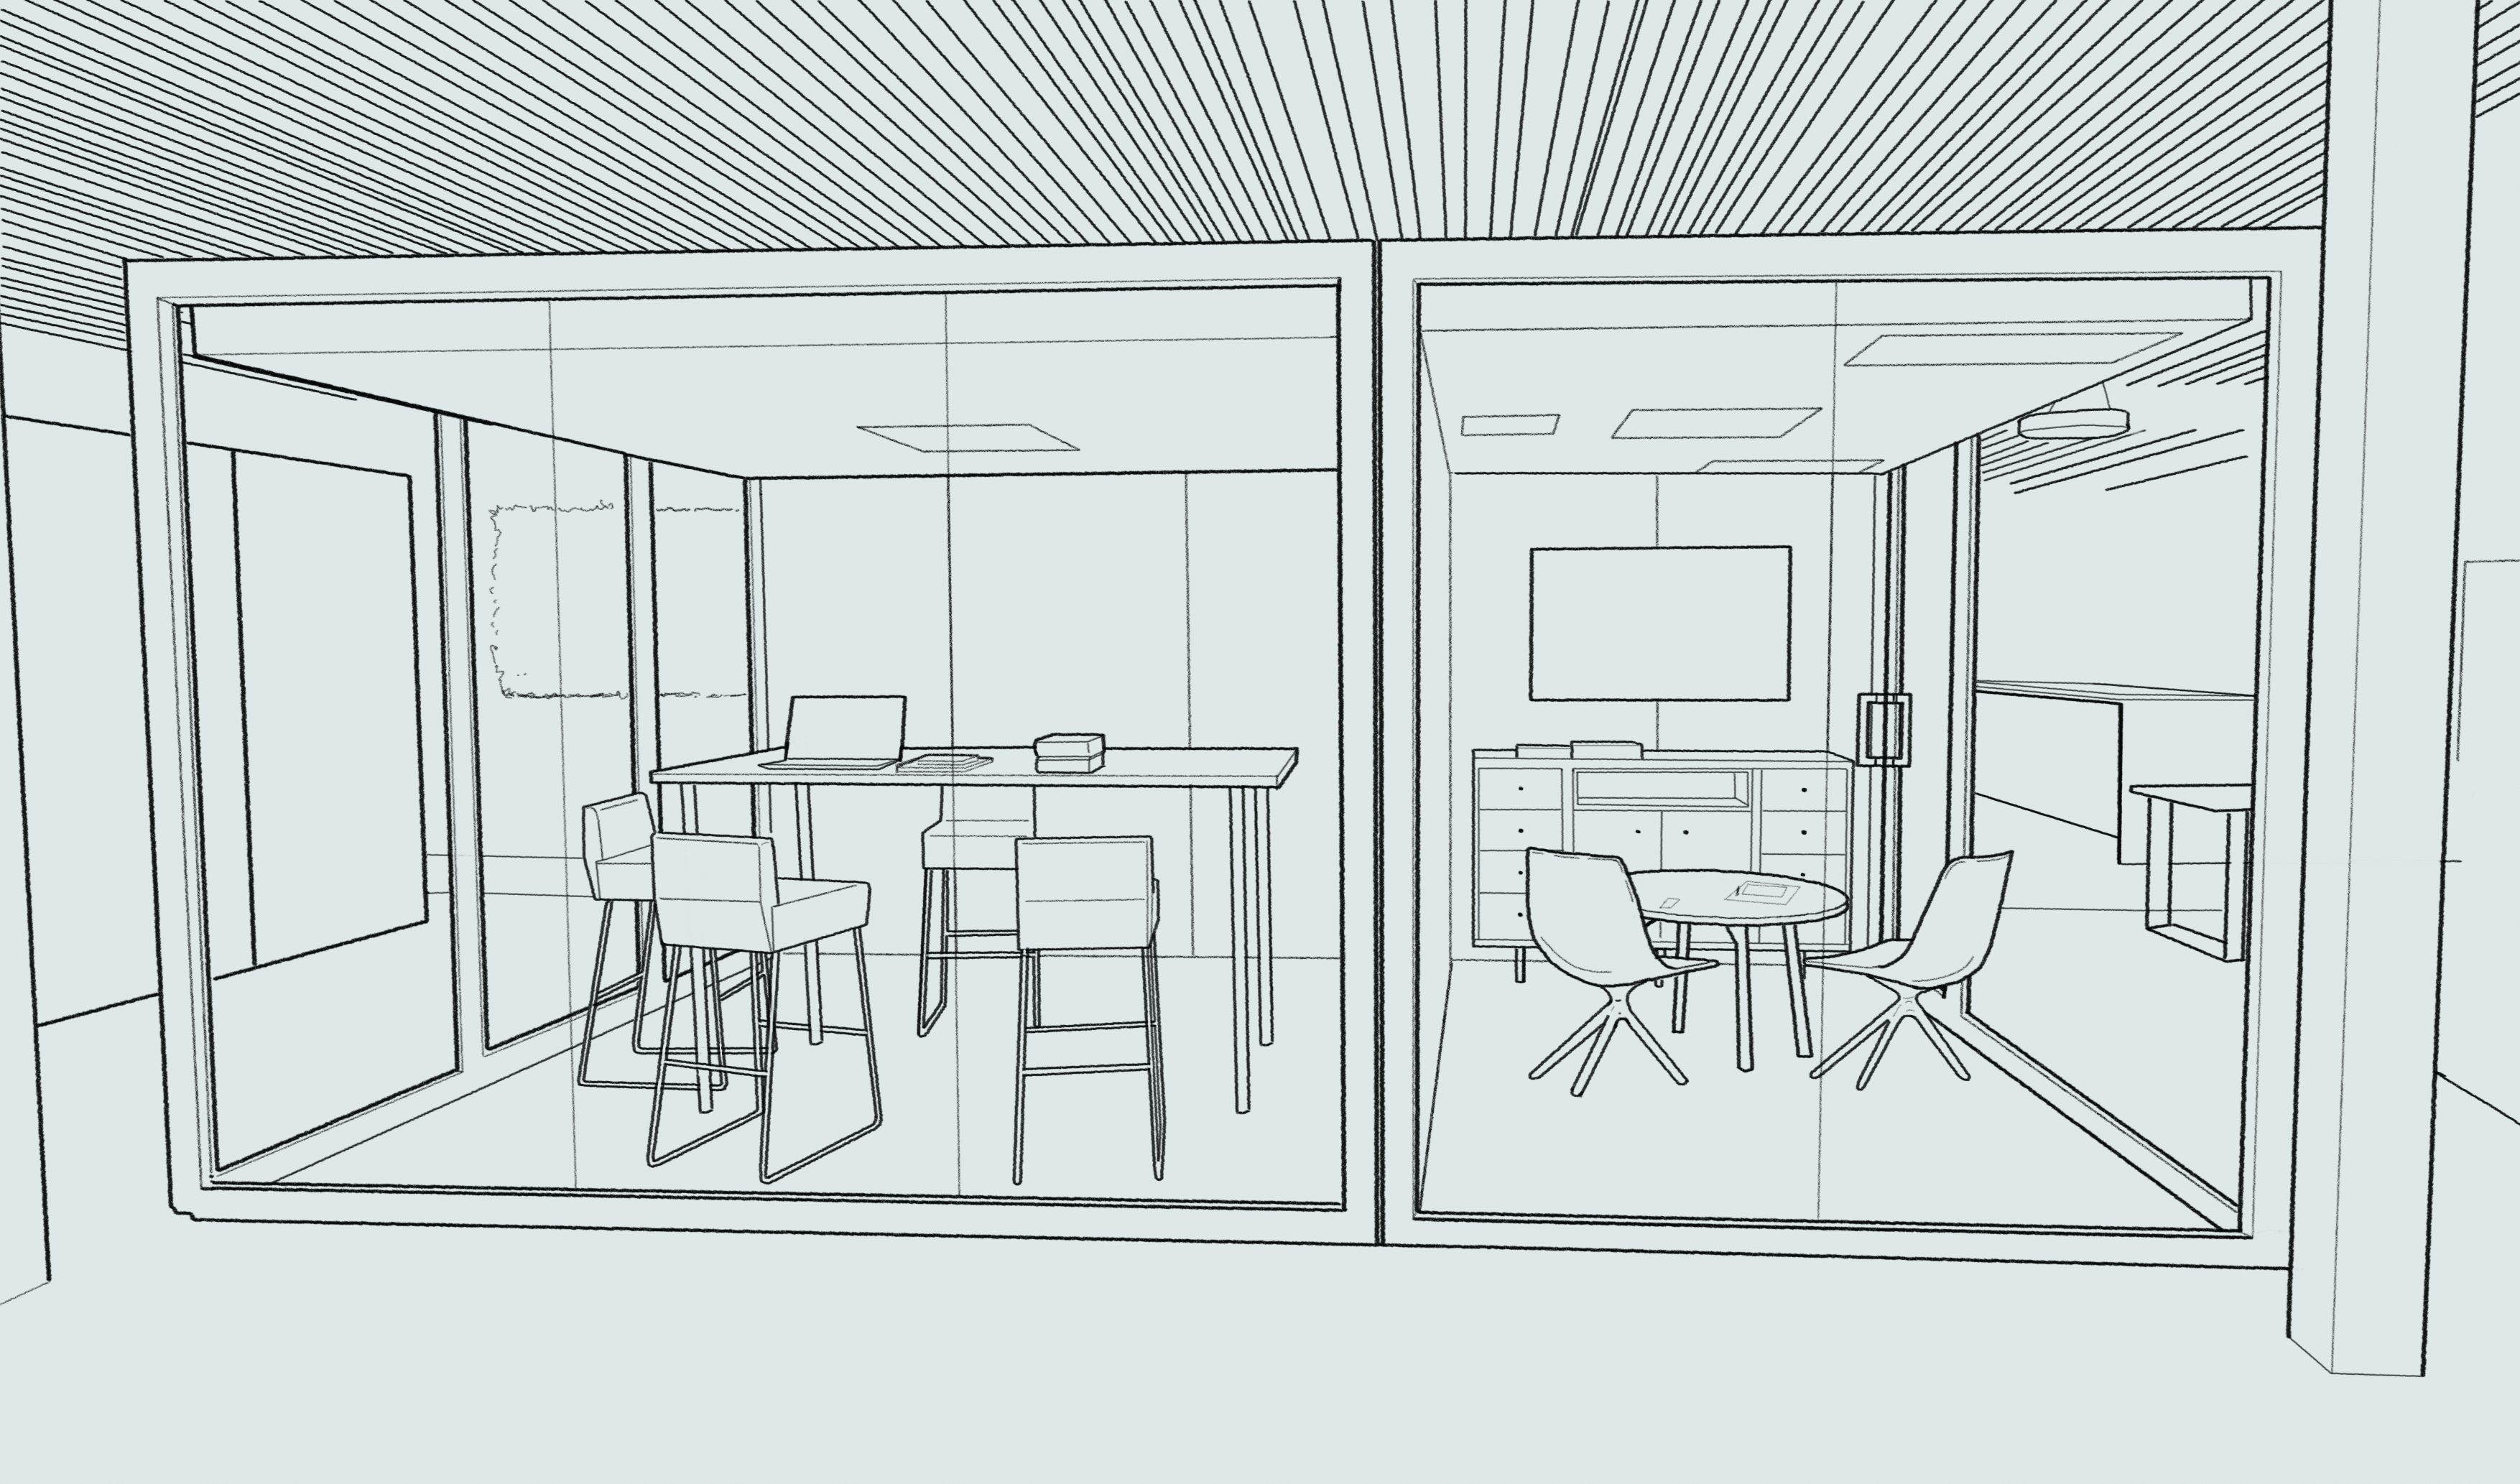 A pencil sketch of a Meet in an office